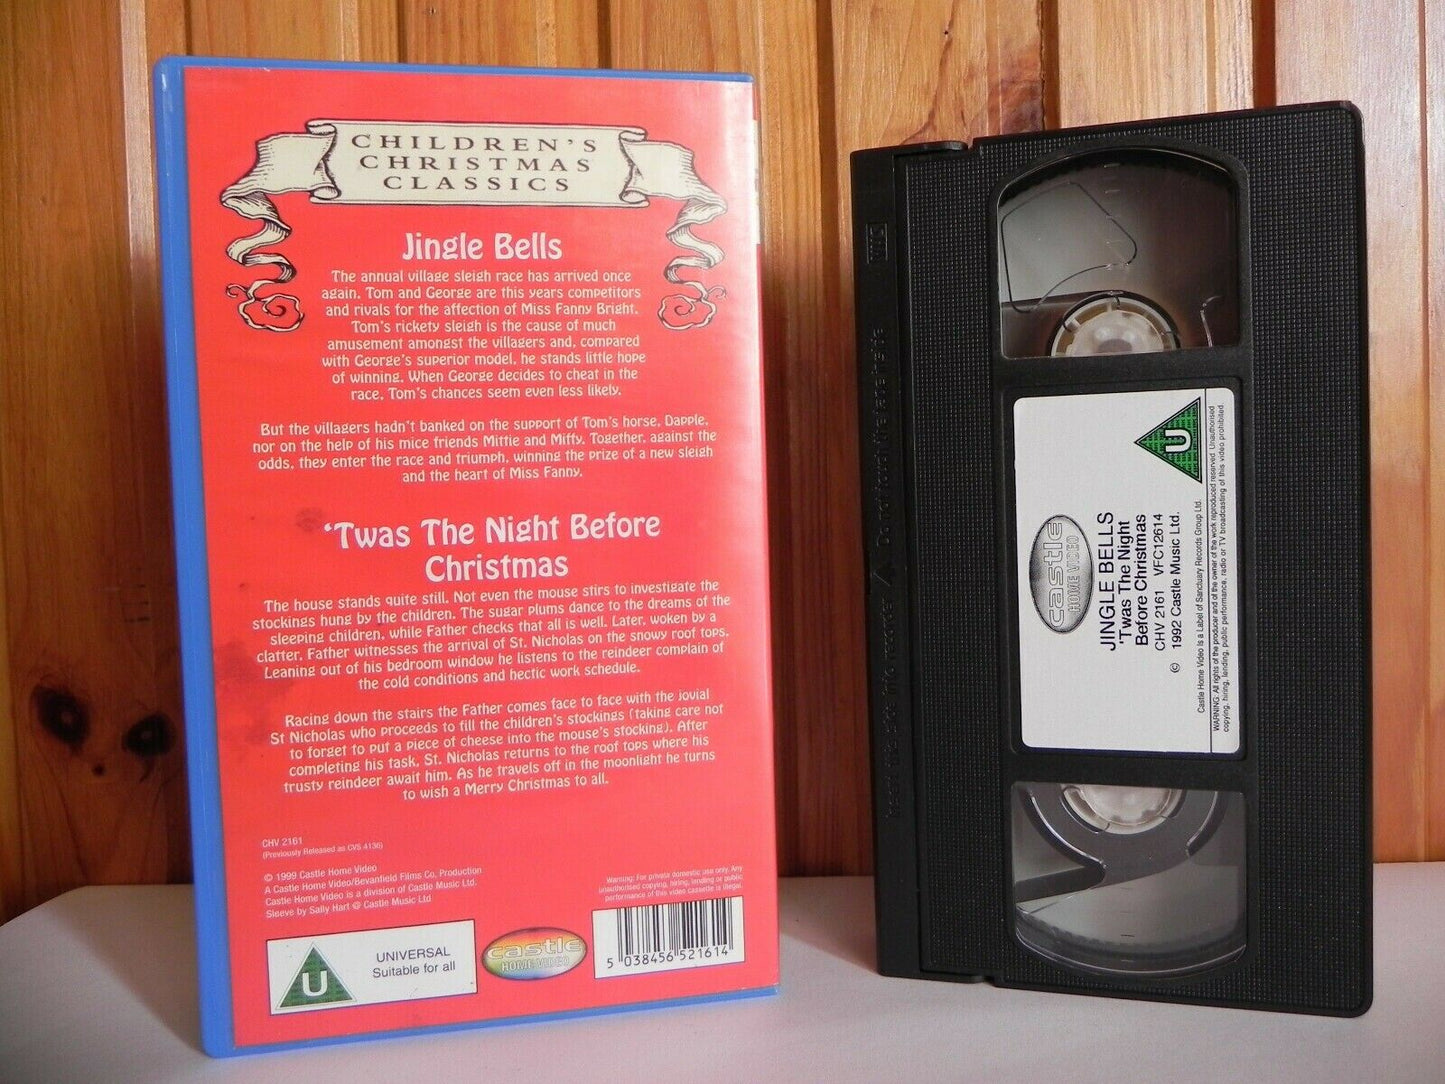 Children's Christmas Classics - Jingle Bells - Two Stories - Kids - Pal VHS-